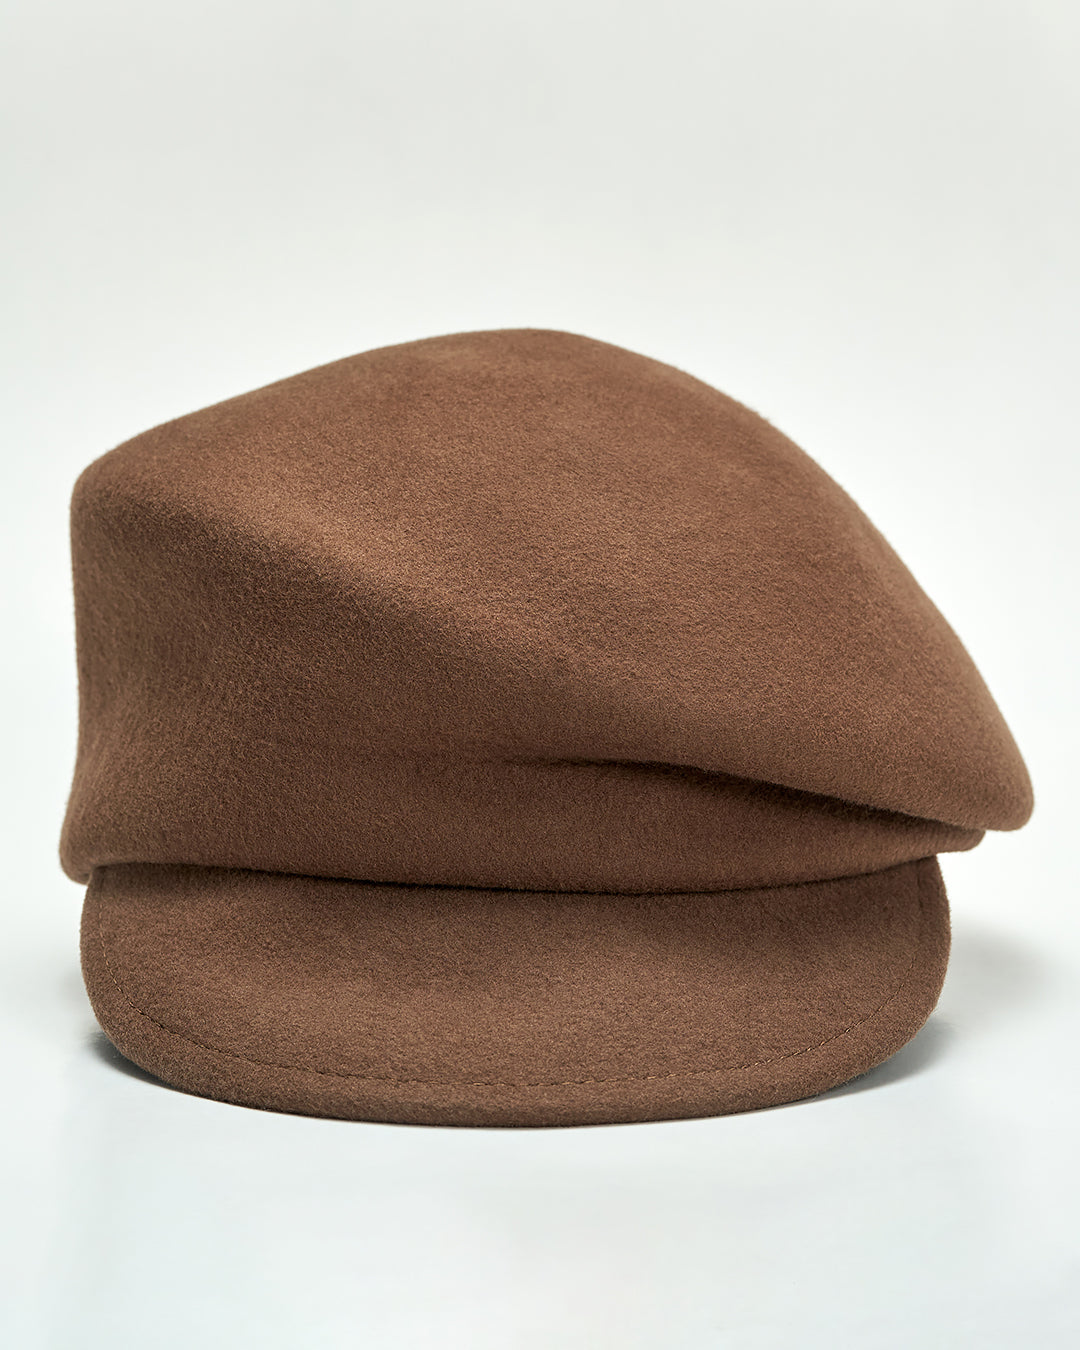 Alesia C. FRENCHI VISOR Wool Felt Beret Hat